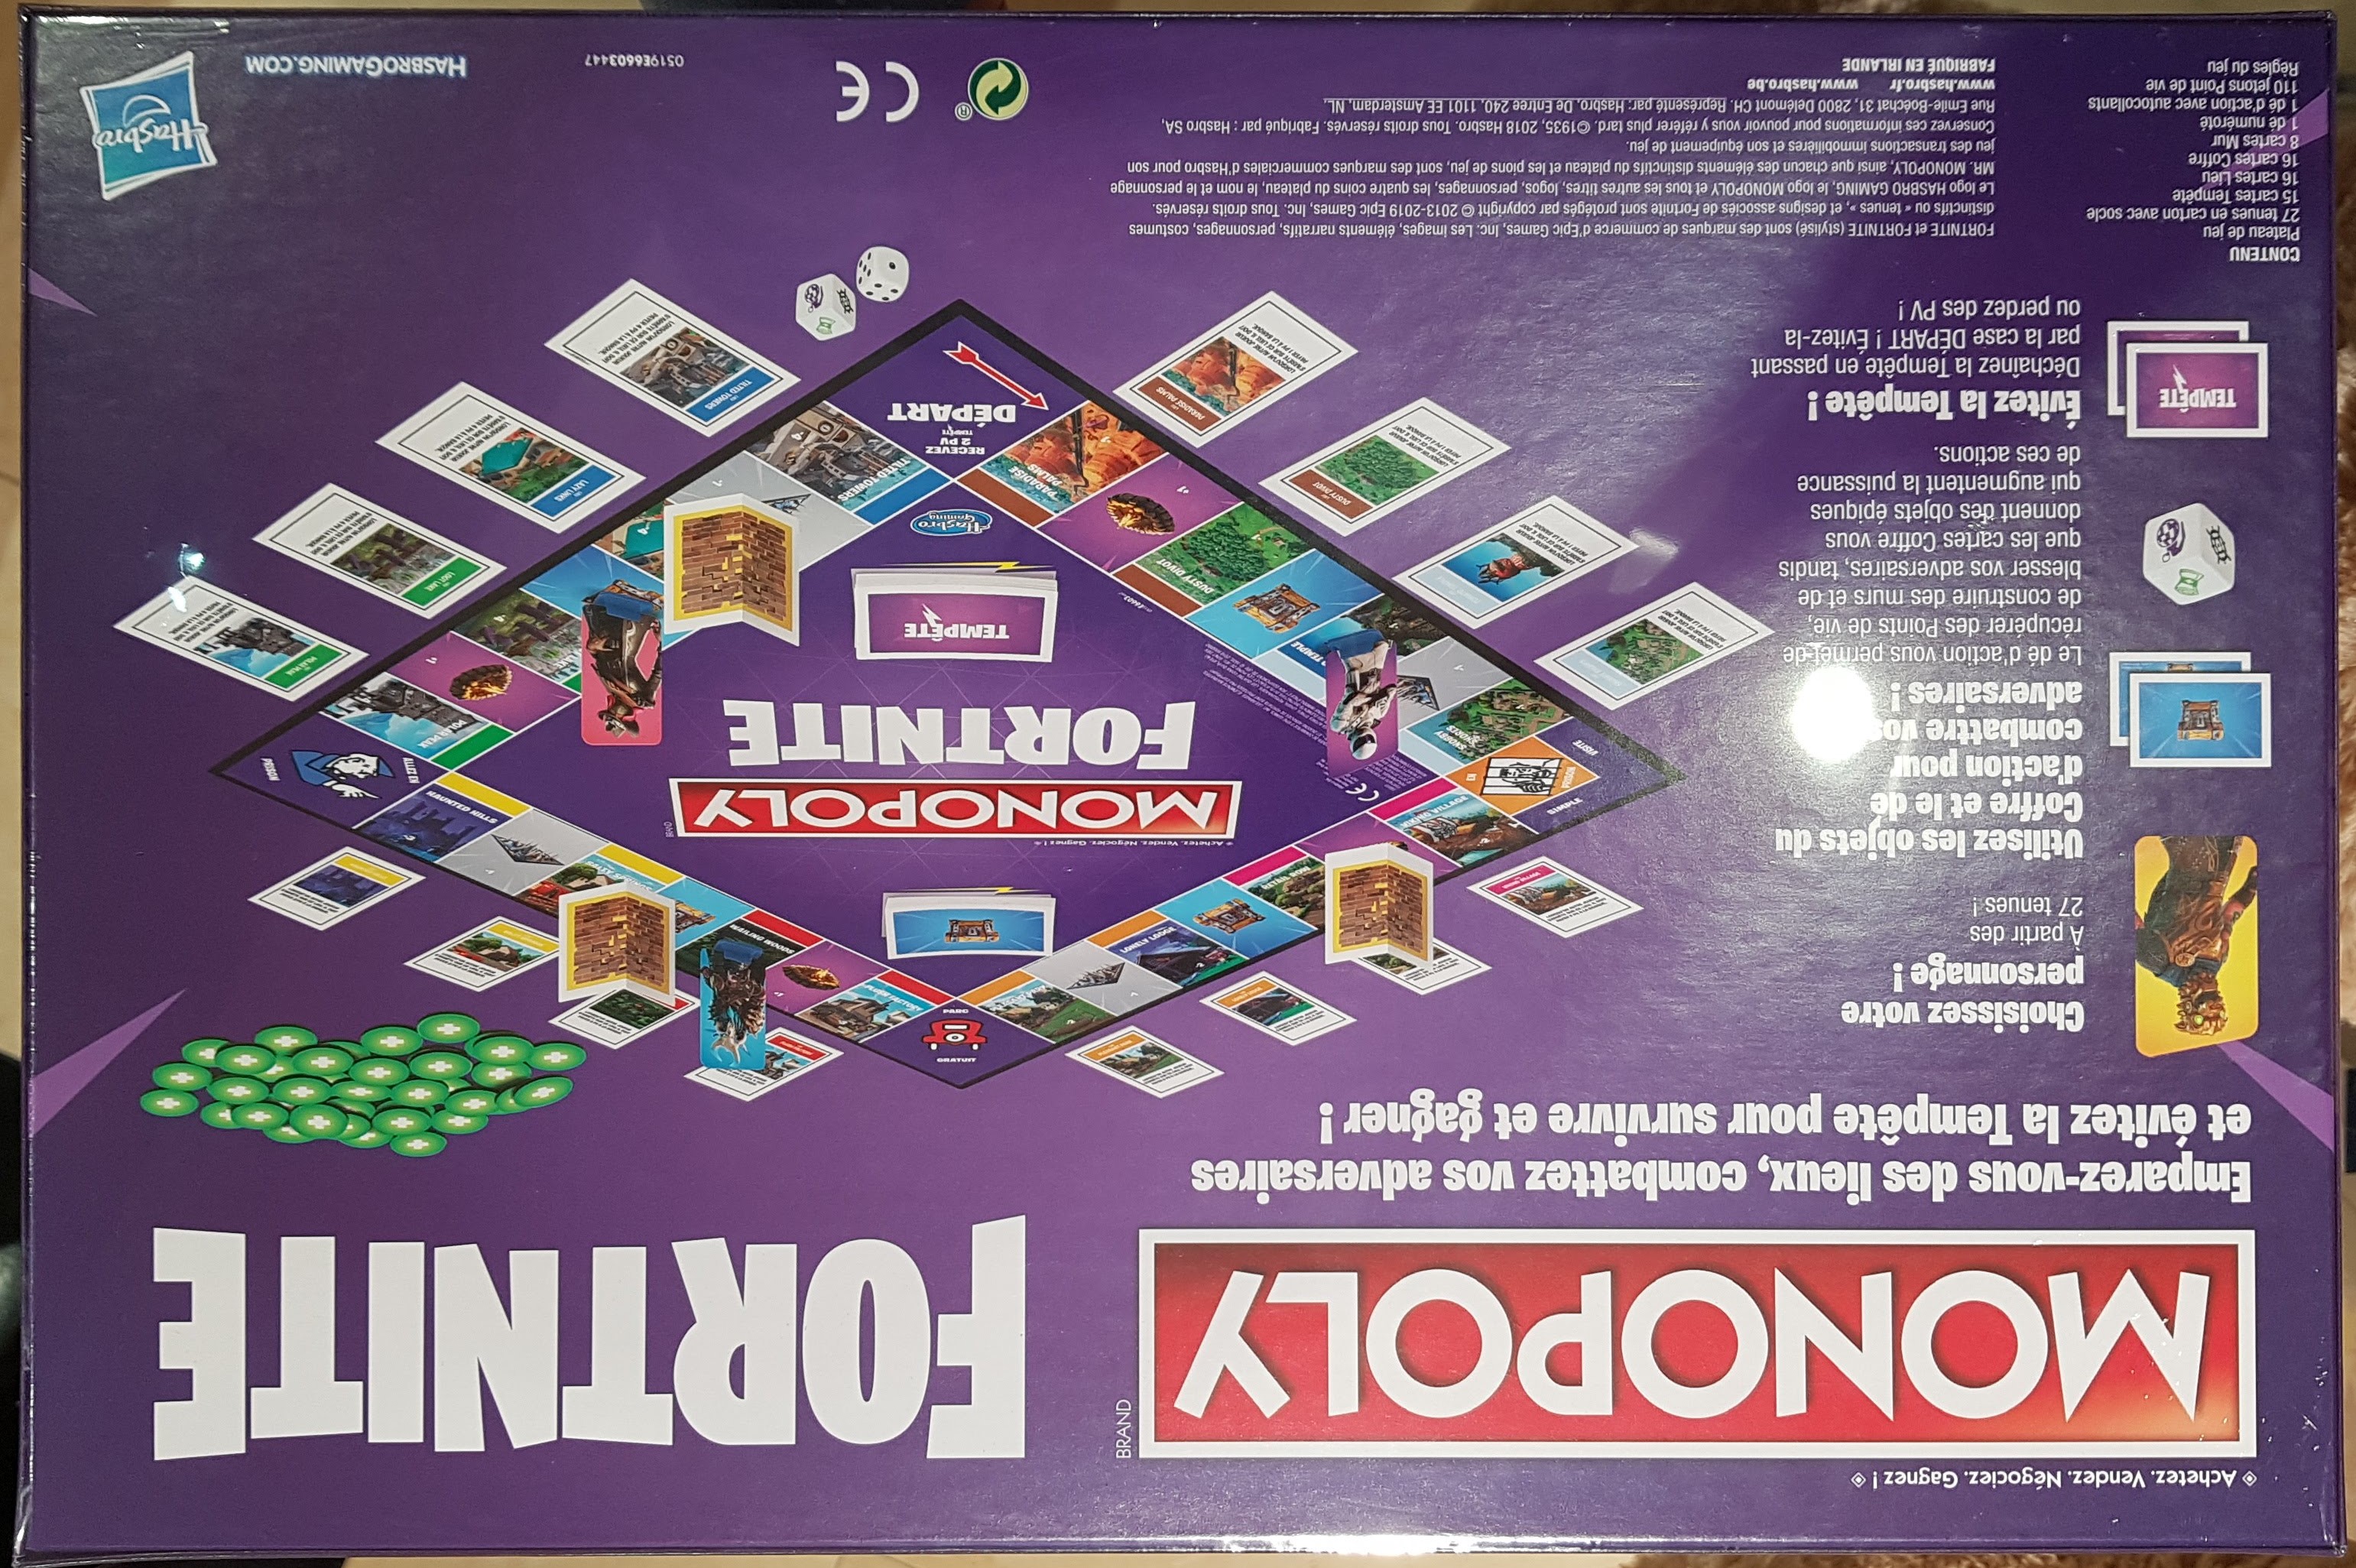 Monopoly Fortnite nouvelle version (version 2)